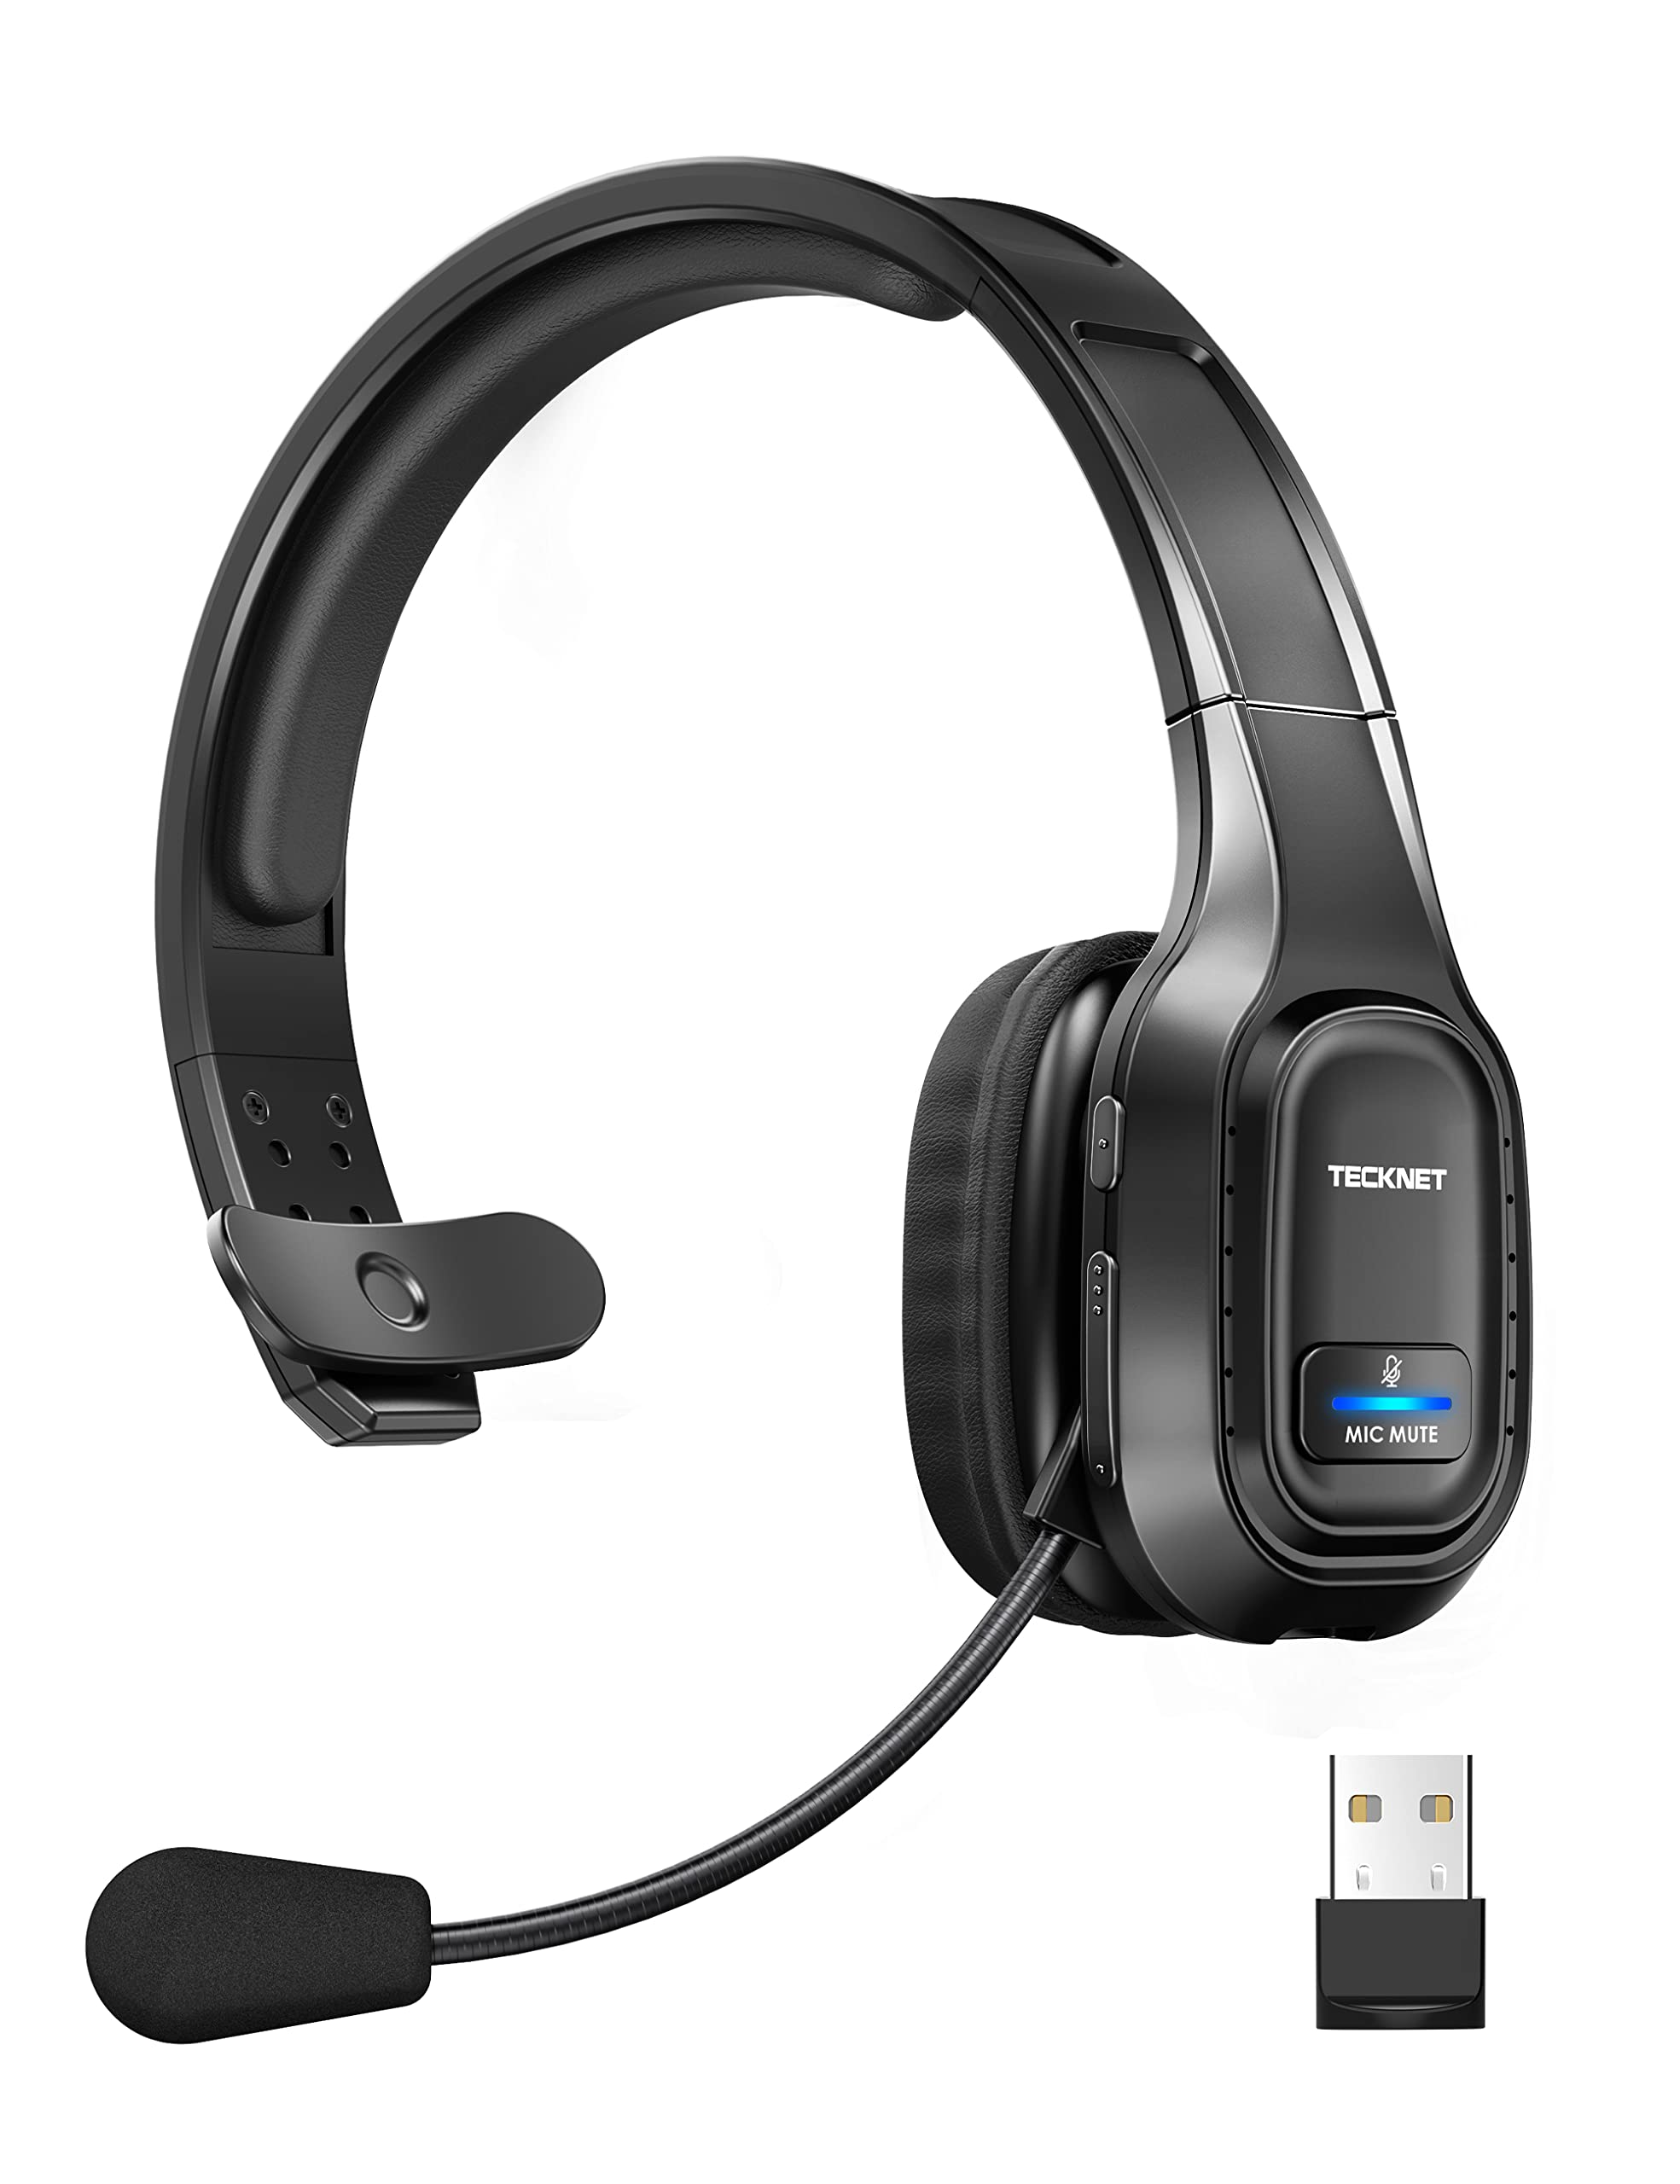 Comprar Bluetooth 5.0 Auriculares con Micrófonos, Auricular Bluetooth Cascos  PC con Estación de Carga Cancel- Telematic Online